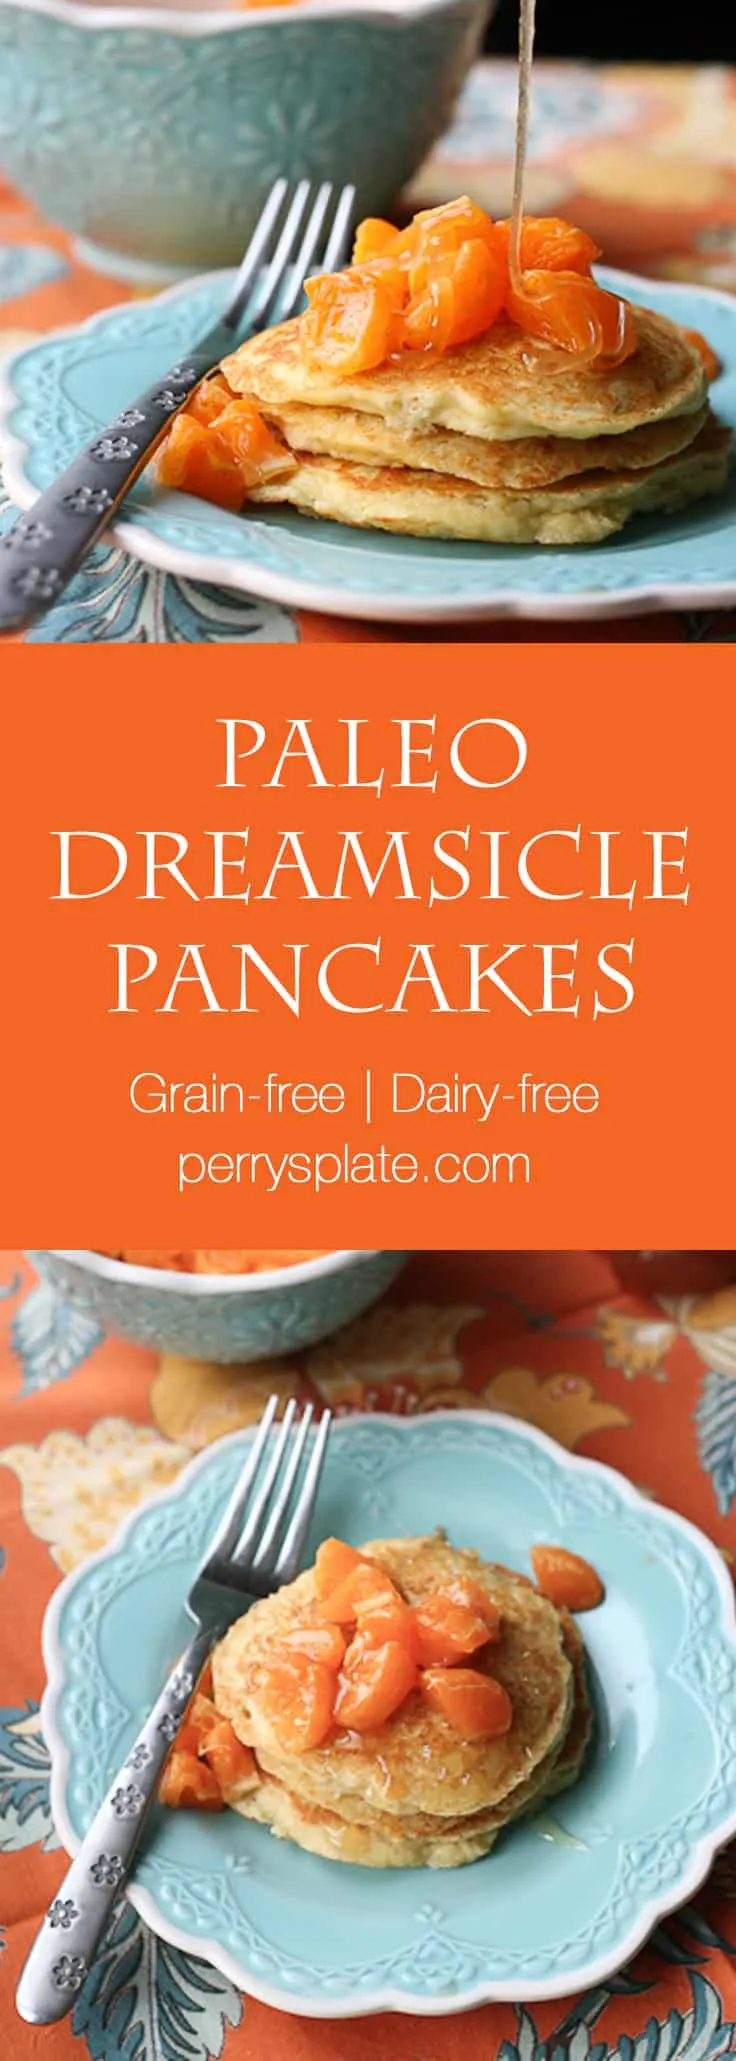 Paleo Dreamsicle Pancakes with Clementine-Vanilla Bean Compote | paleo recipes | grain-free recipes | gluten-free recipes | paleo pancakes | paleo breakfast | orange recipes | perrysplate.com